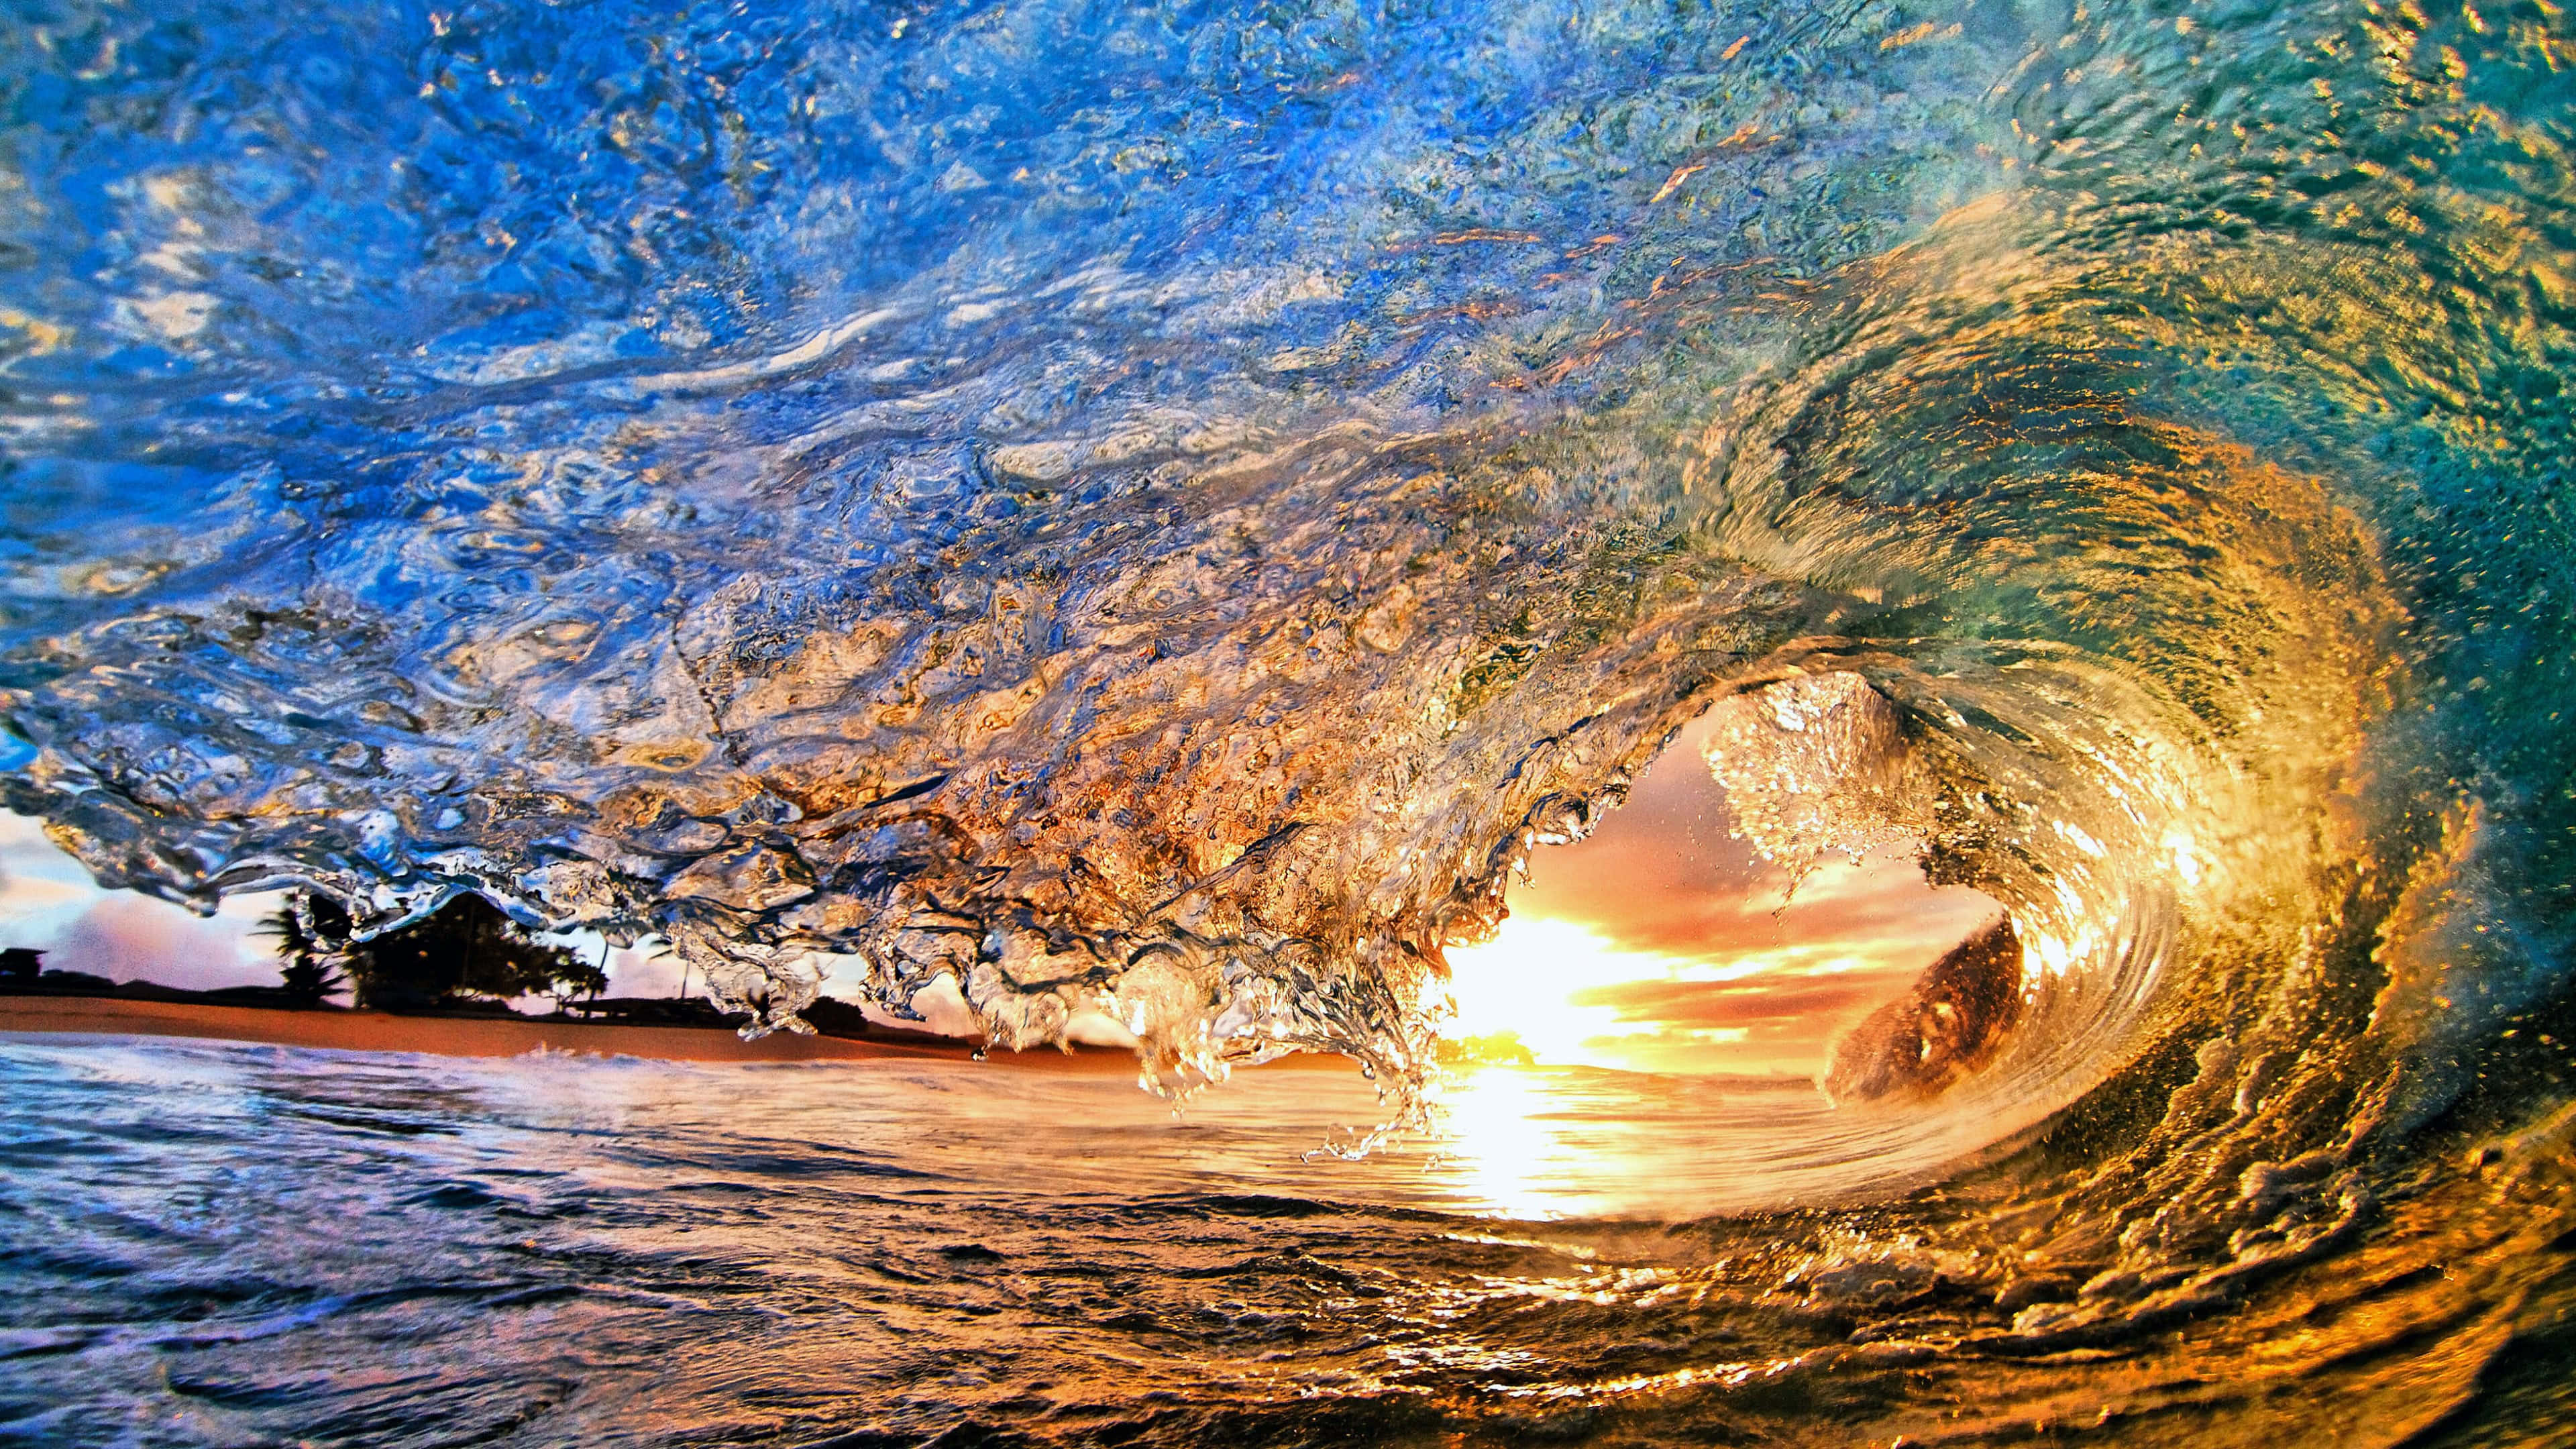 Caption: Spectacular 4k Ocean View Wallpaper